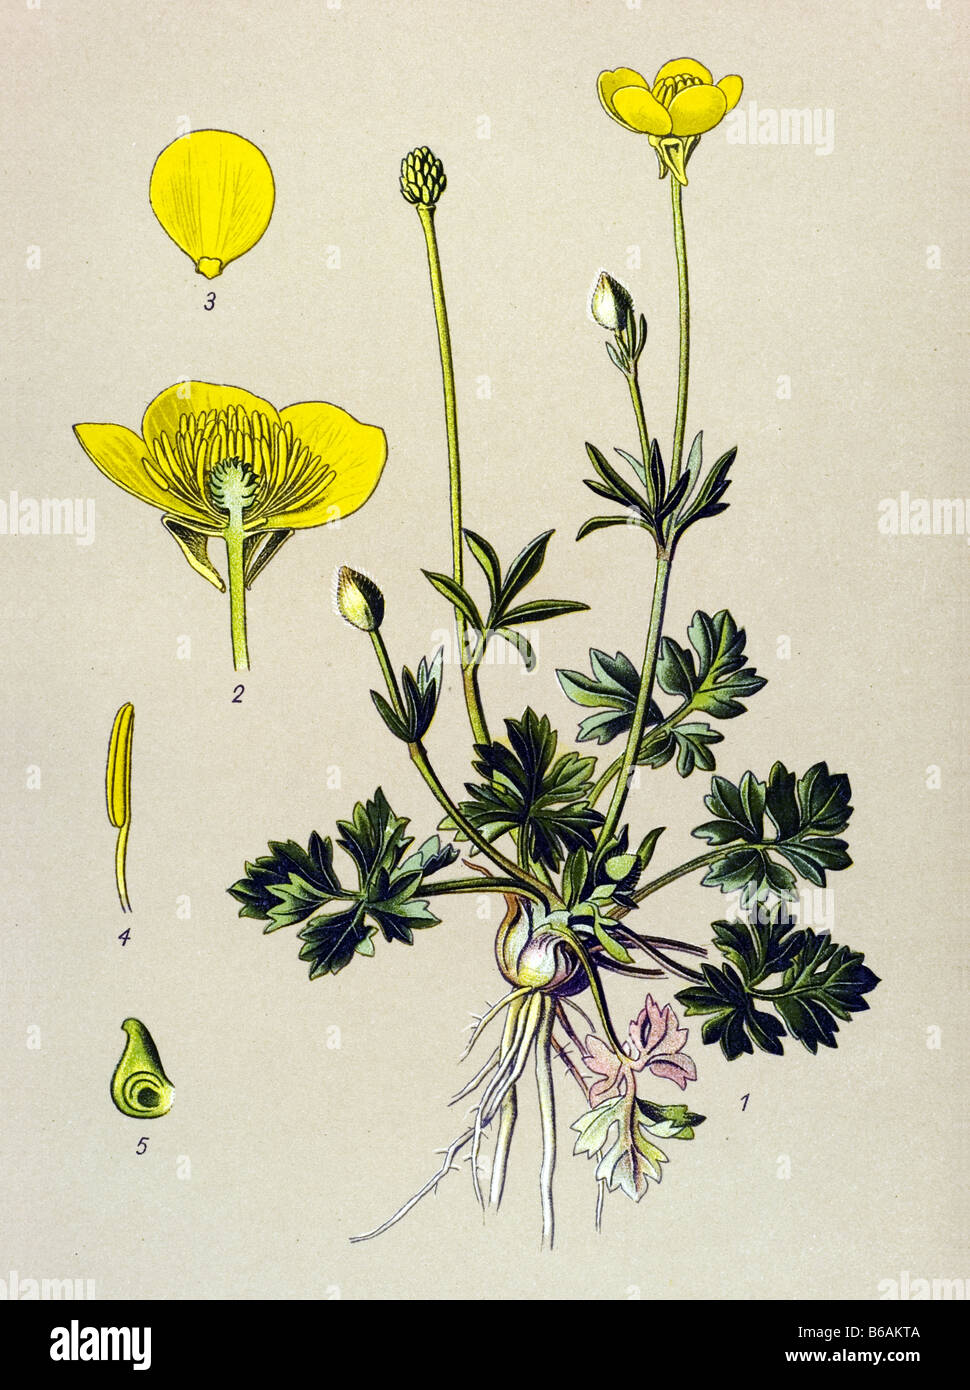 St Anthony's turnip, Ranunculus bulbosus poisonous plants illustrations Stock Photo